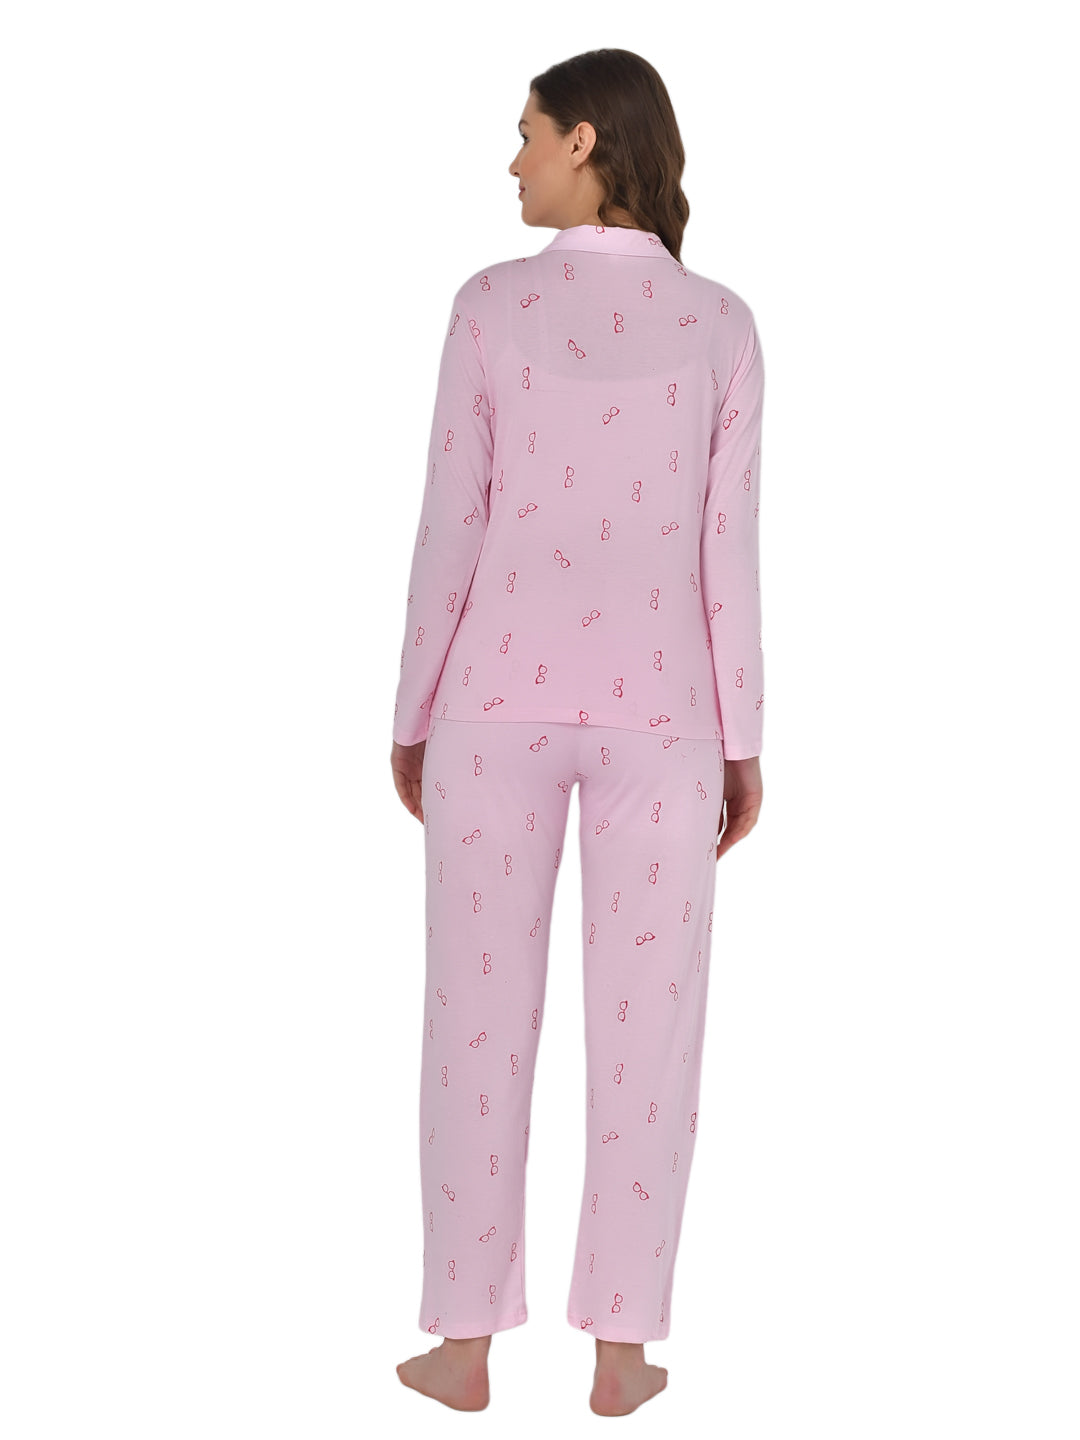 Klamotten Women's Baby Pink Allover Printed Top Pyjama Set N54Rb